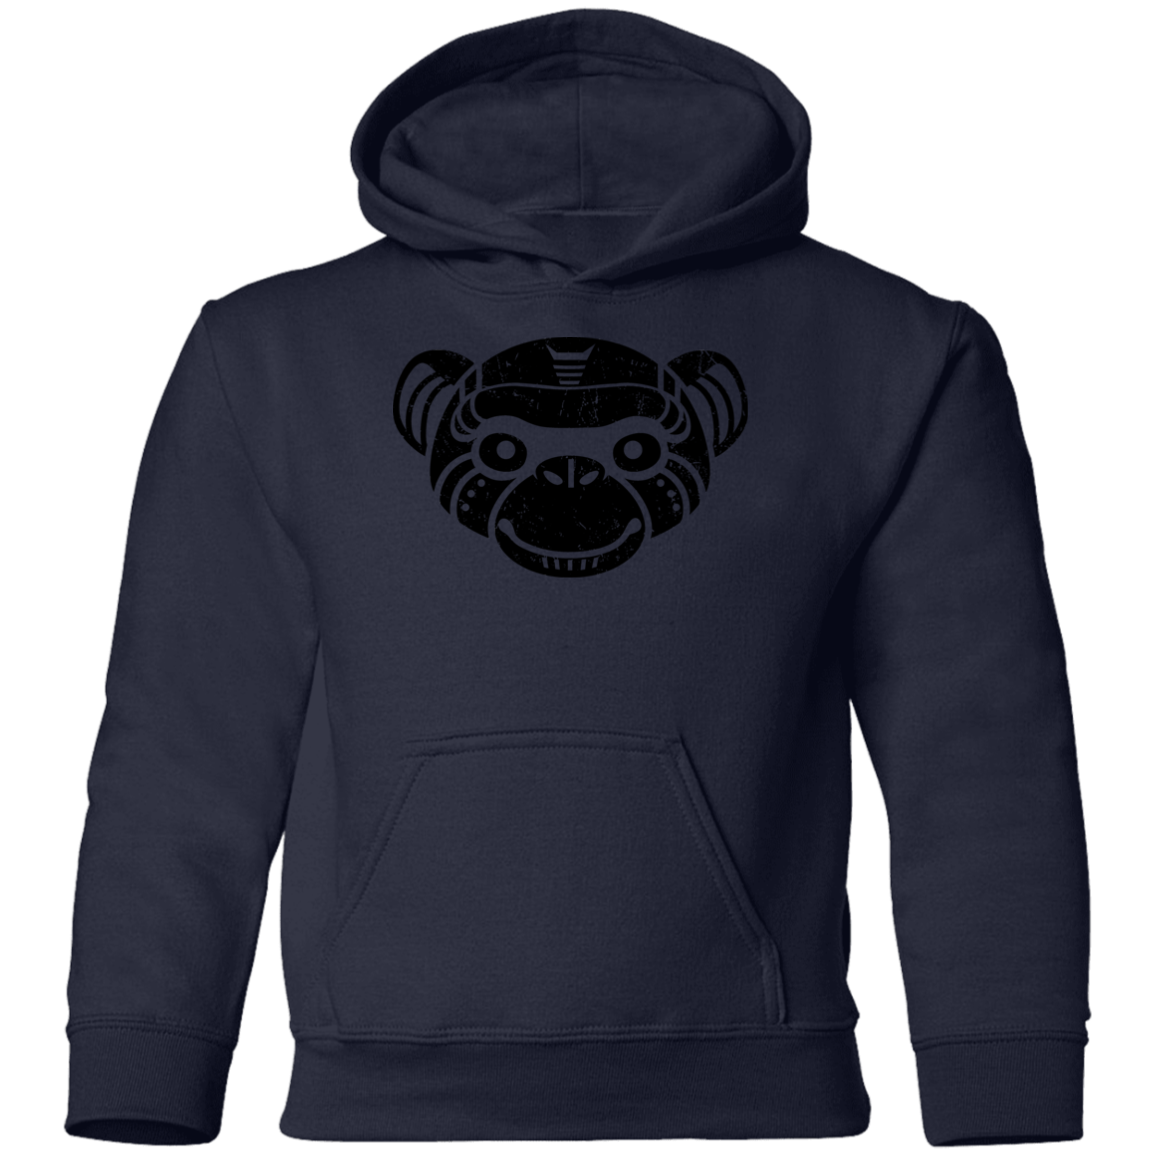 Black Distressed Emblem Hoodies for Kids (Monkey/Fix)